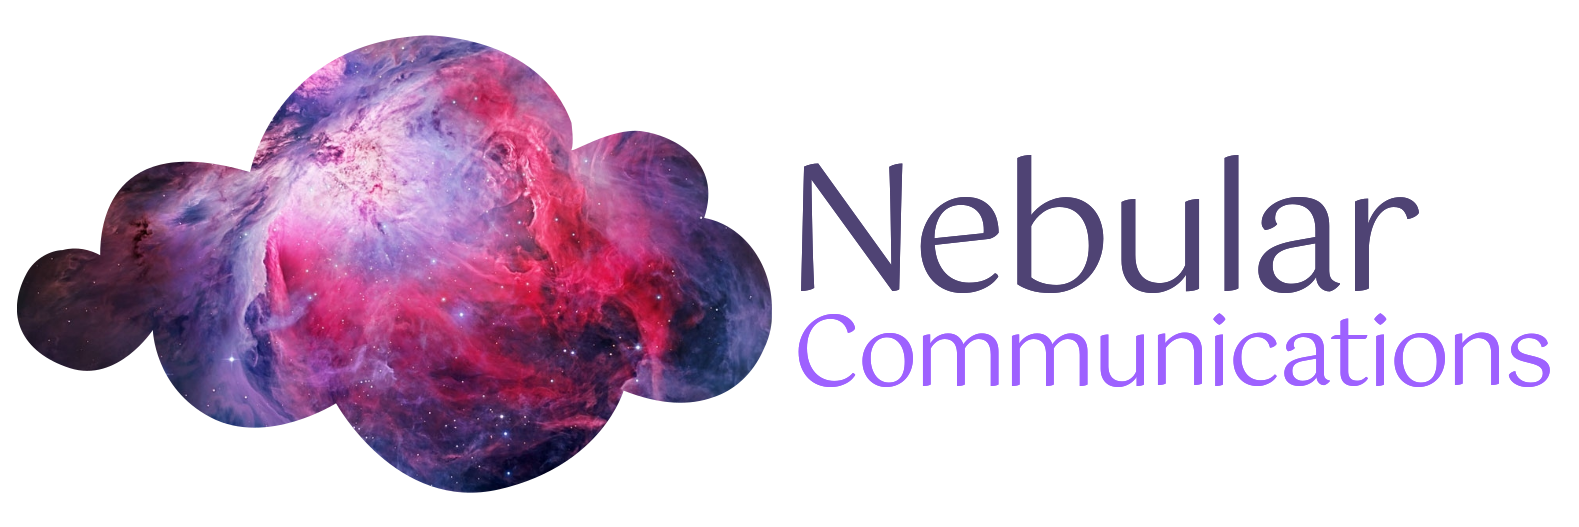 Nebular Communications